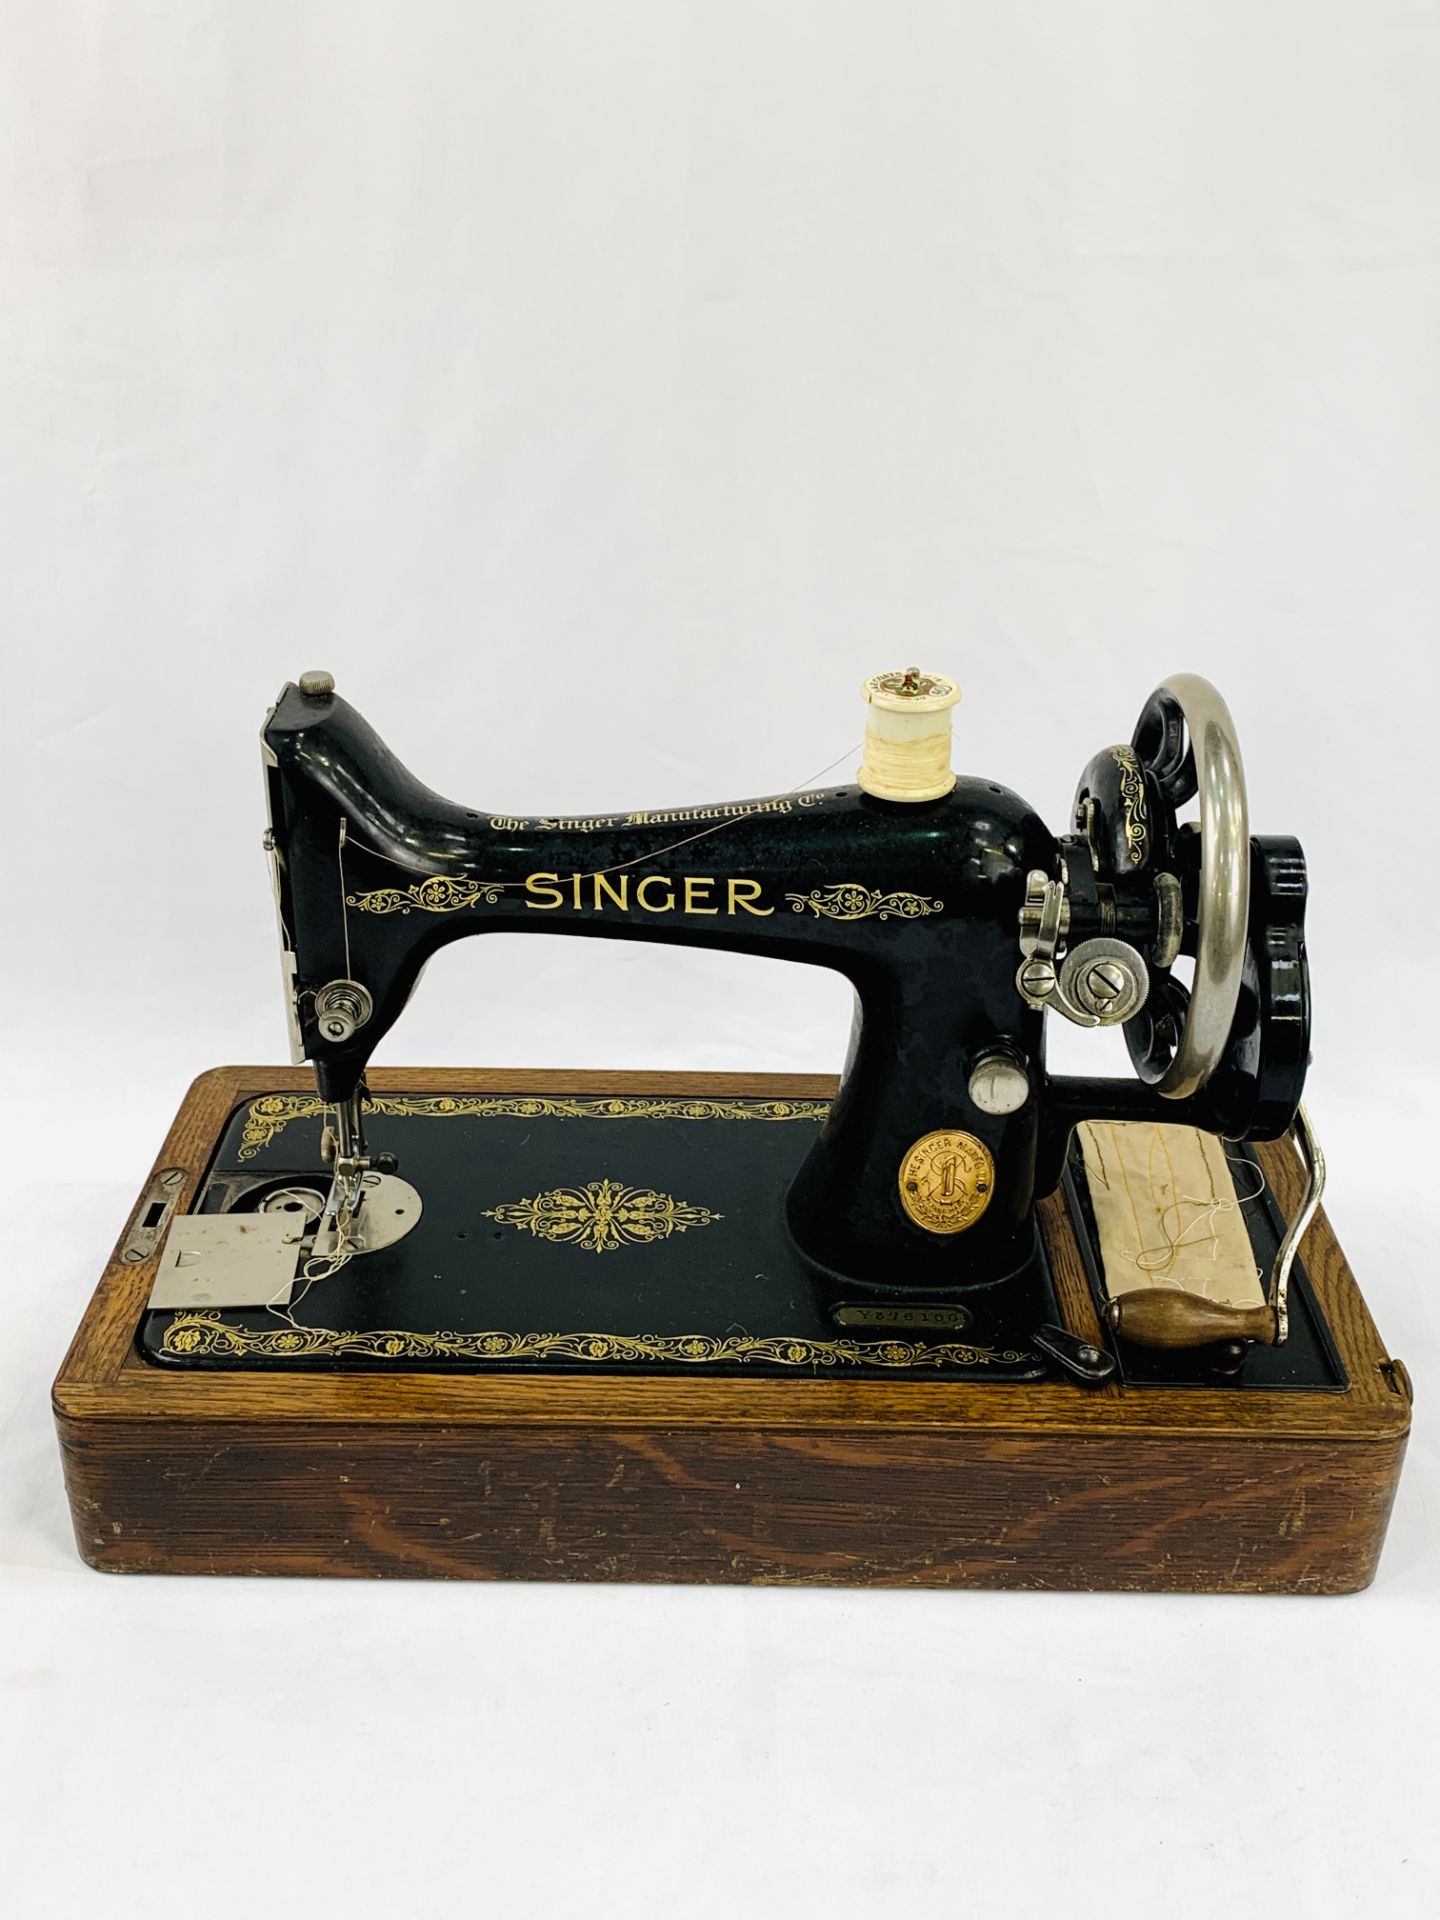 Manual Singer Sewing Machine in case, no. 376100